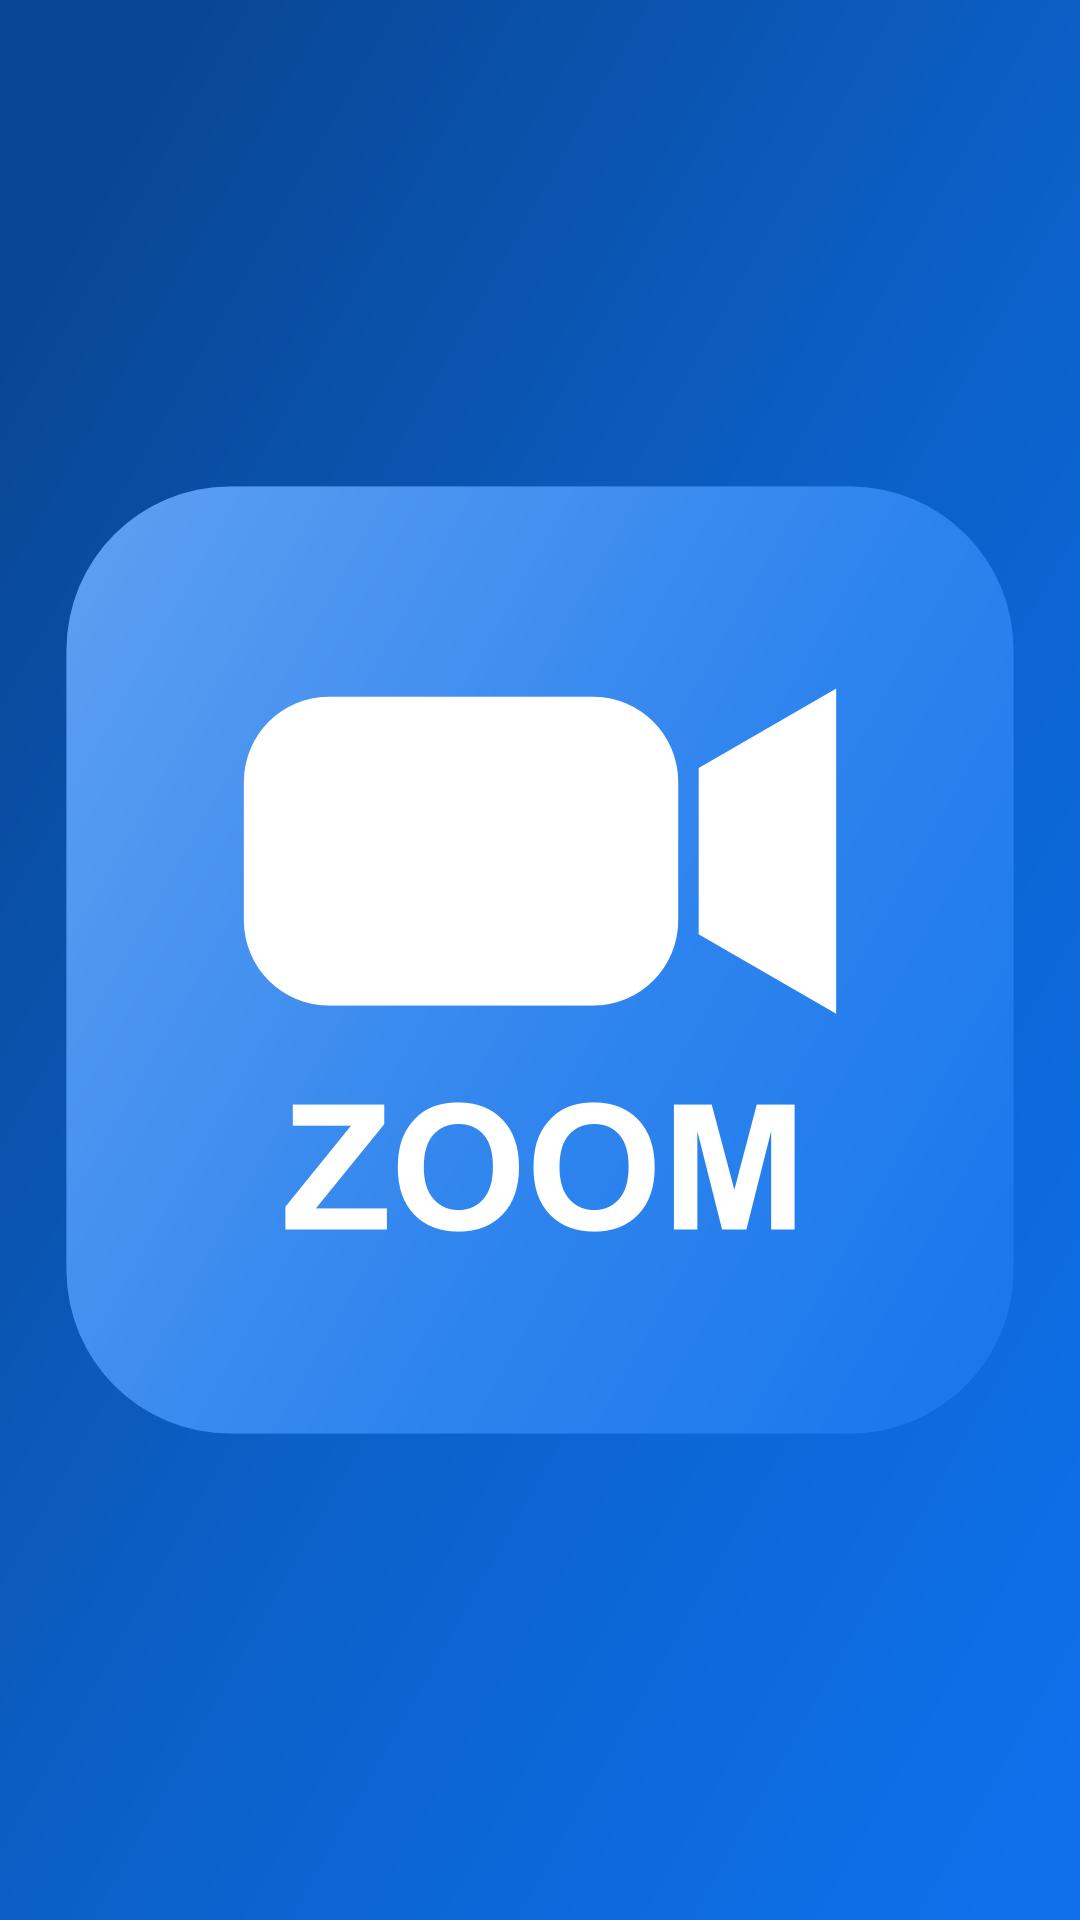 download zoom app for laptop windows